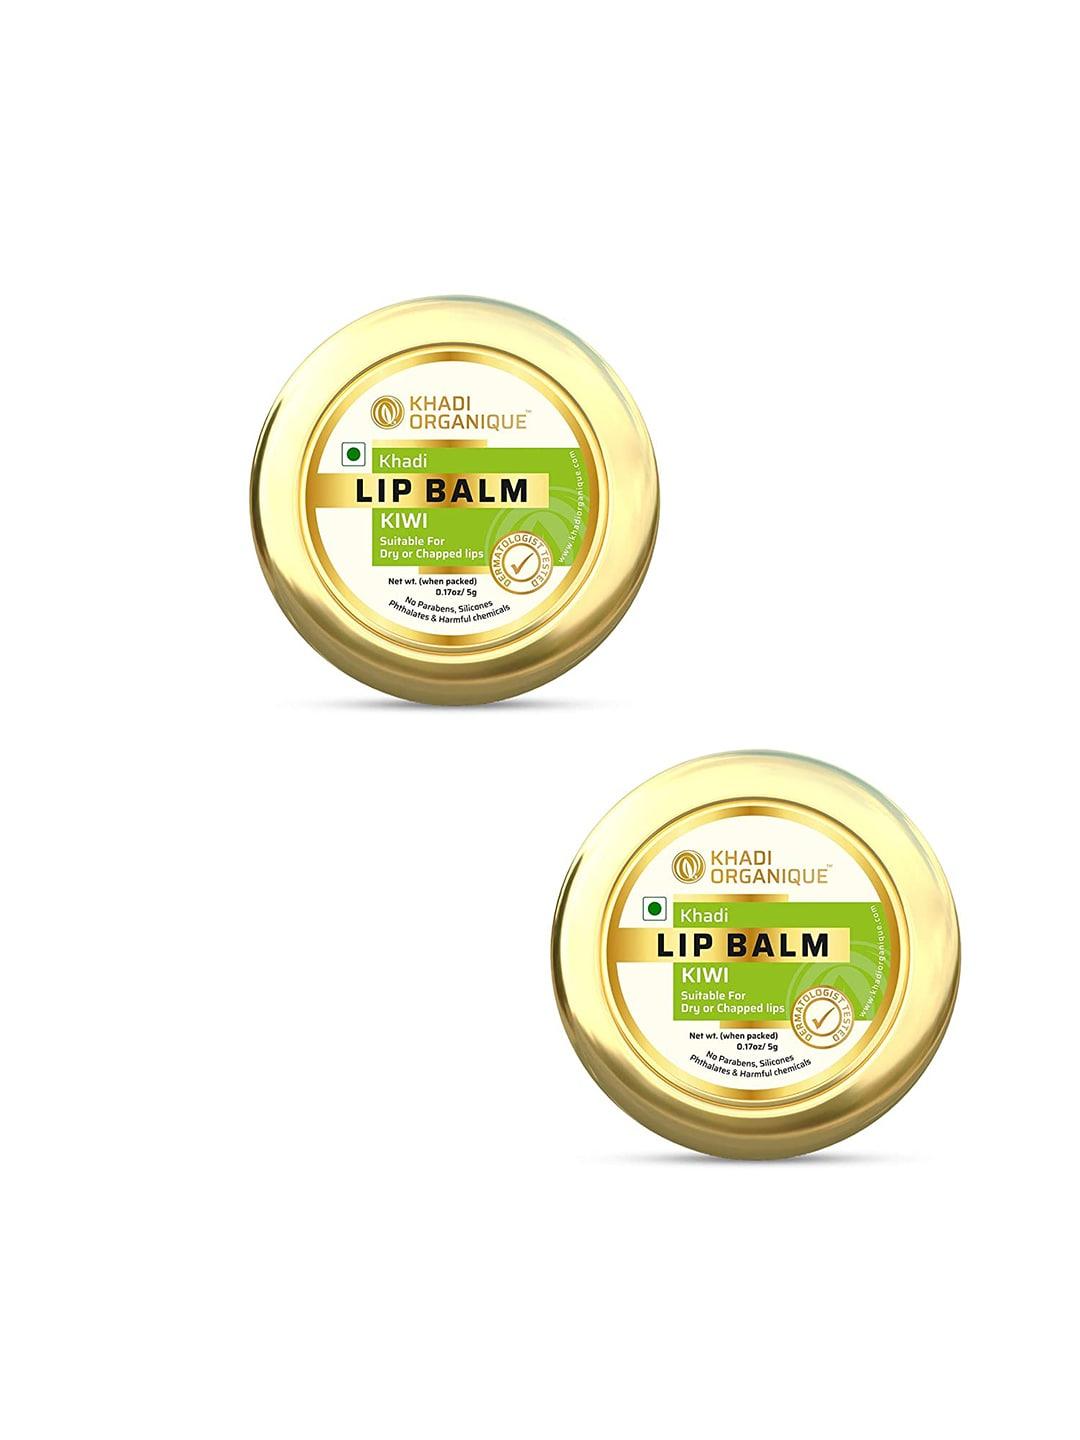 Khadi Organique Set Of 2 Kiwi Lip Balm with Aloe Vera & Shea Butter - 5g Each